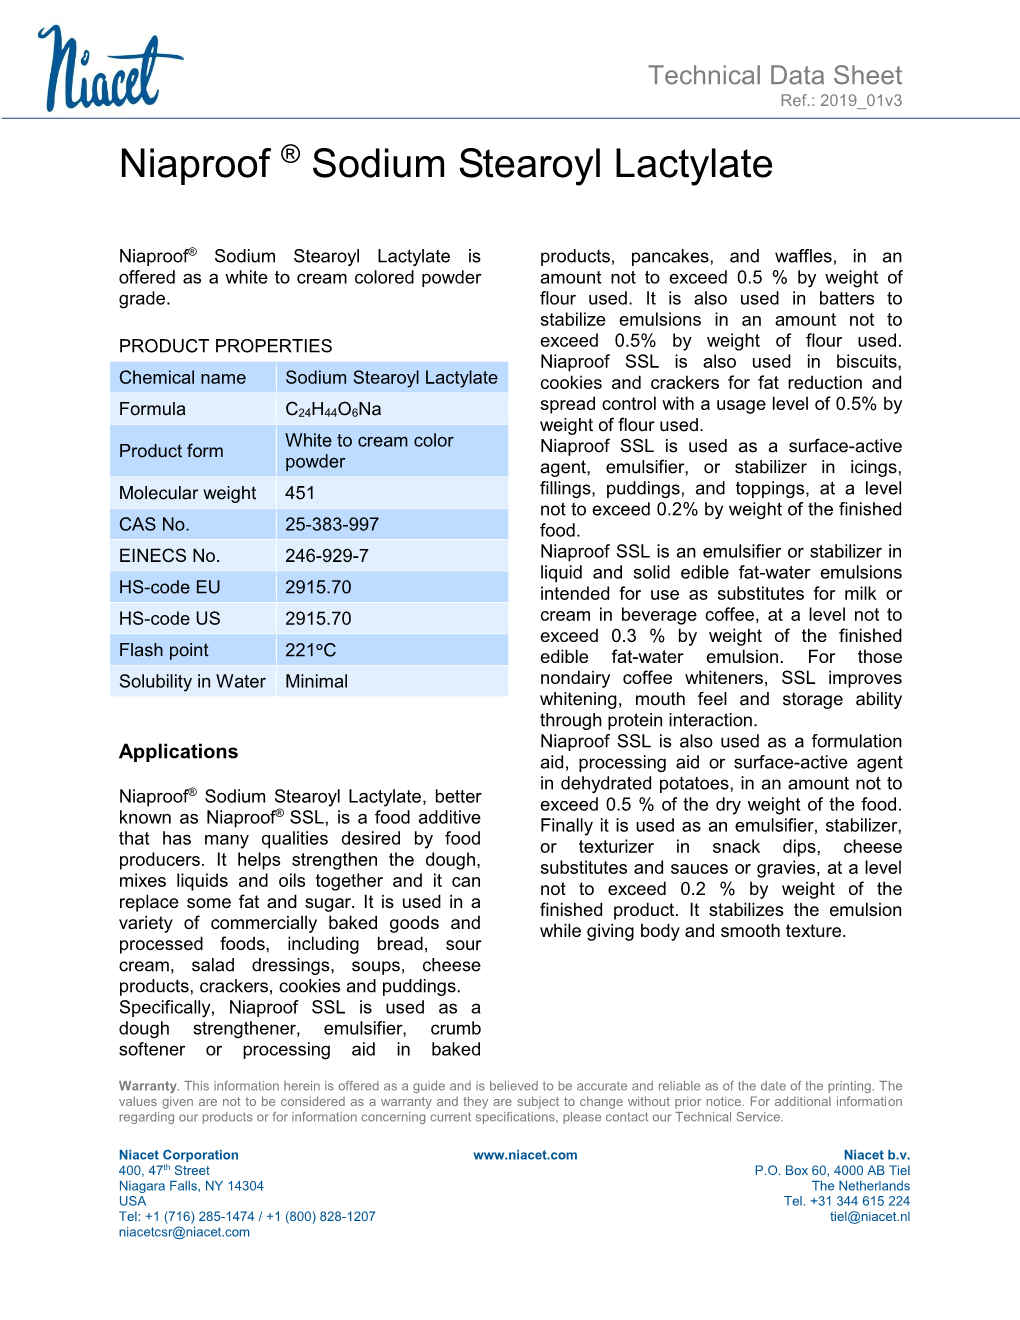 Niaproof ® Sodium Stearoyl Lactylate